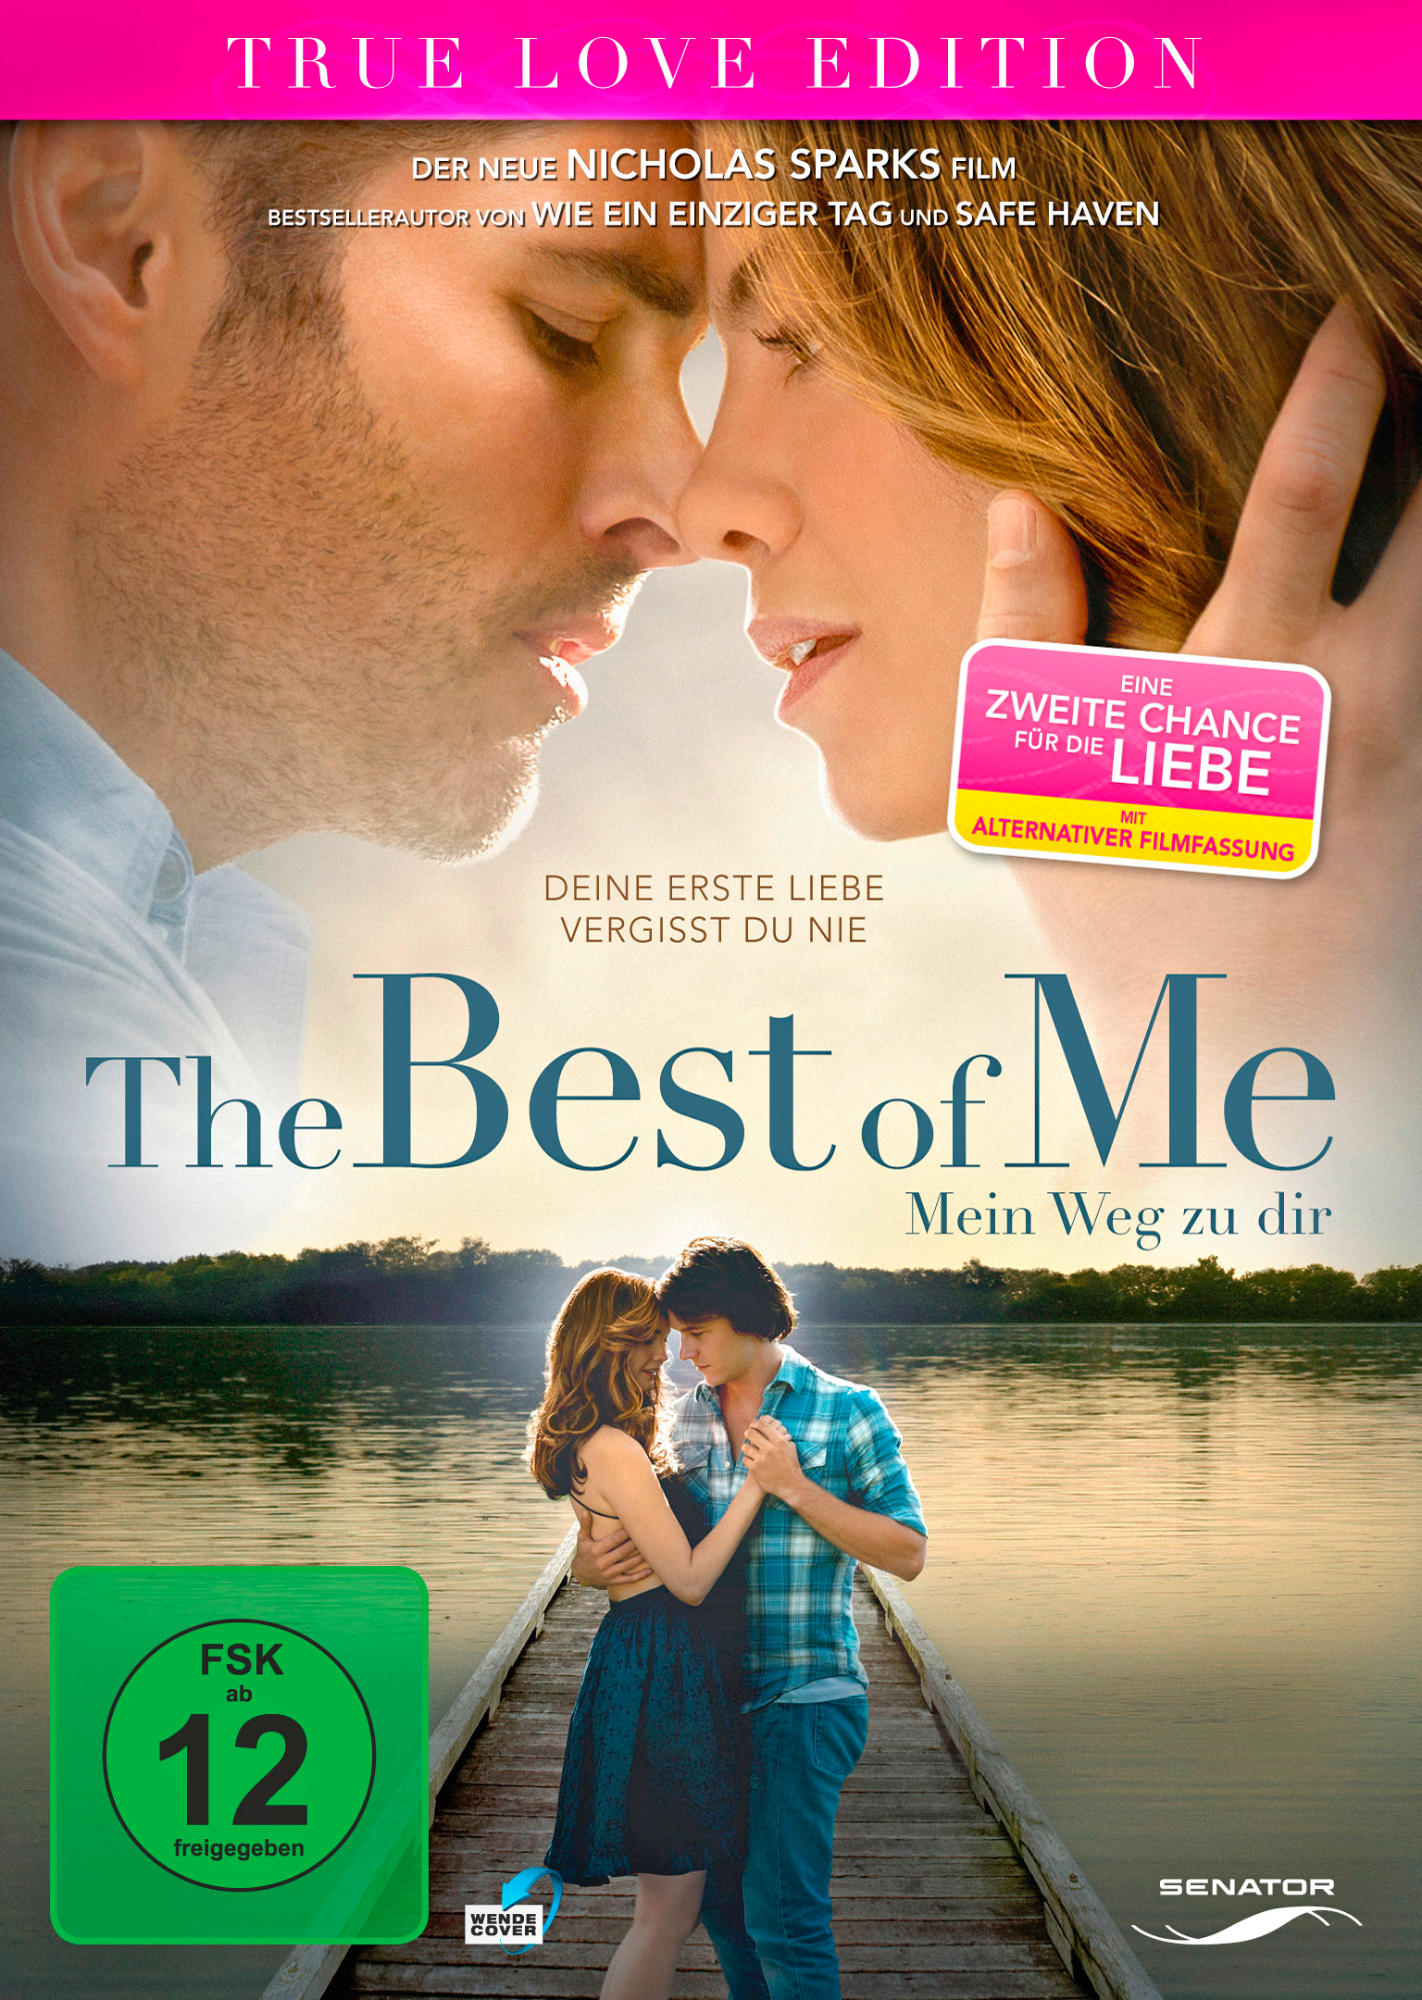 The Best of me dir - Mein Weg DVD zu